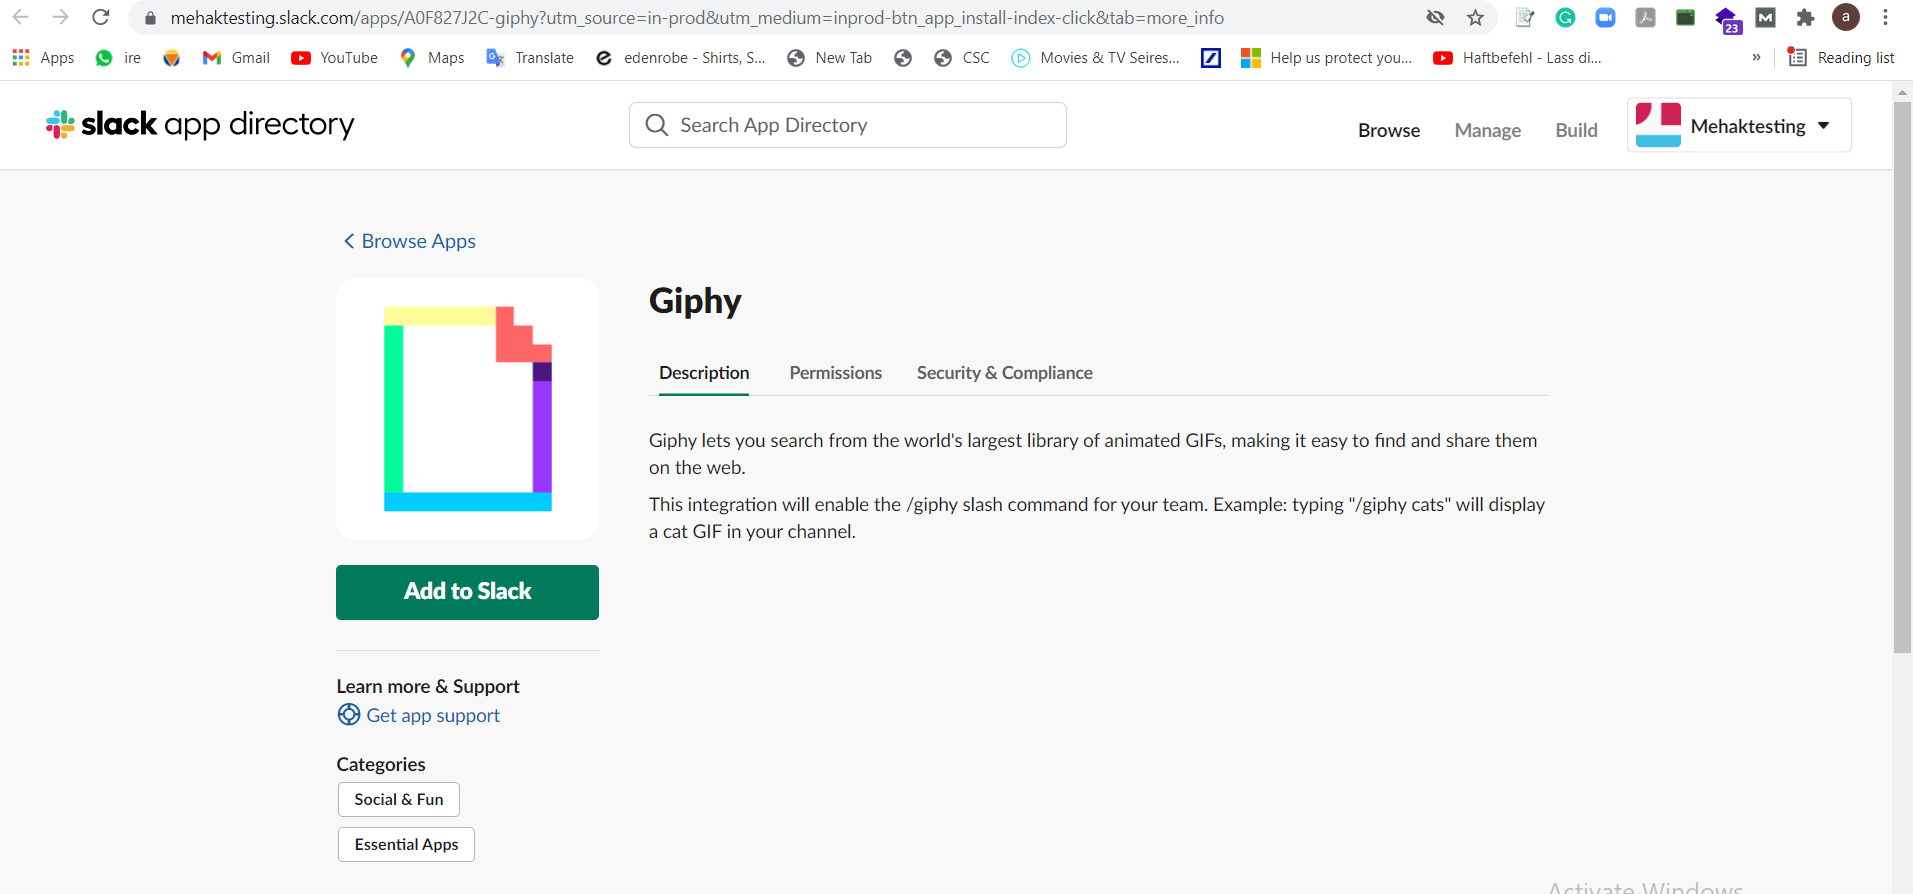 Adding Giphy in Slack